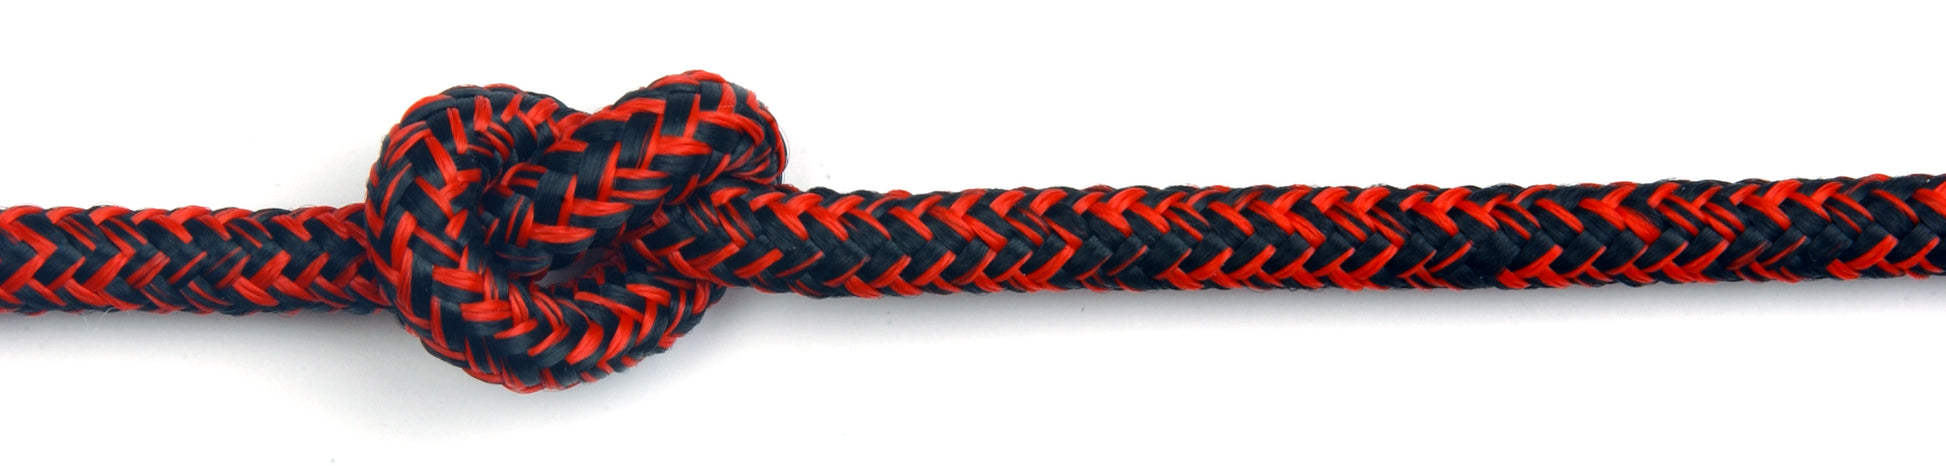 Kingfisher Evo Sheet rope - Dinghy Shack